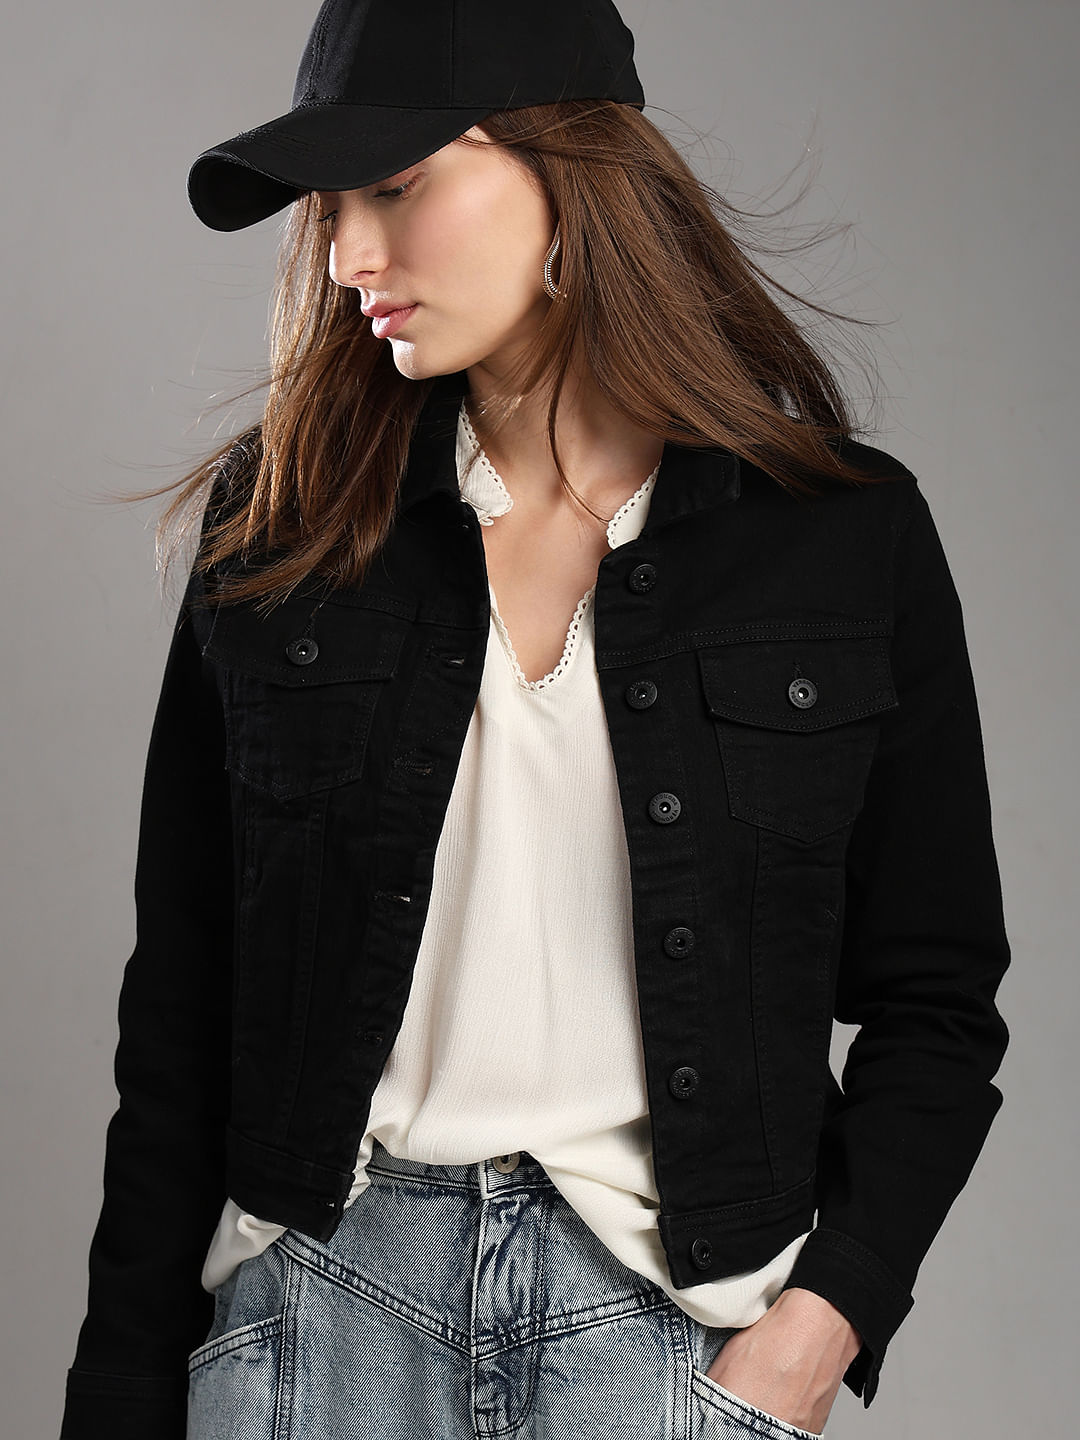 Buy Urbano Fashion Men's Black Regular Fit Washed Sleeveless Denim Jacket  (jakt-denimslvless-black-s) at Amazon.in